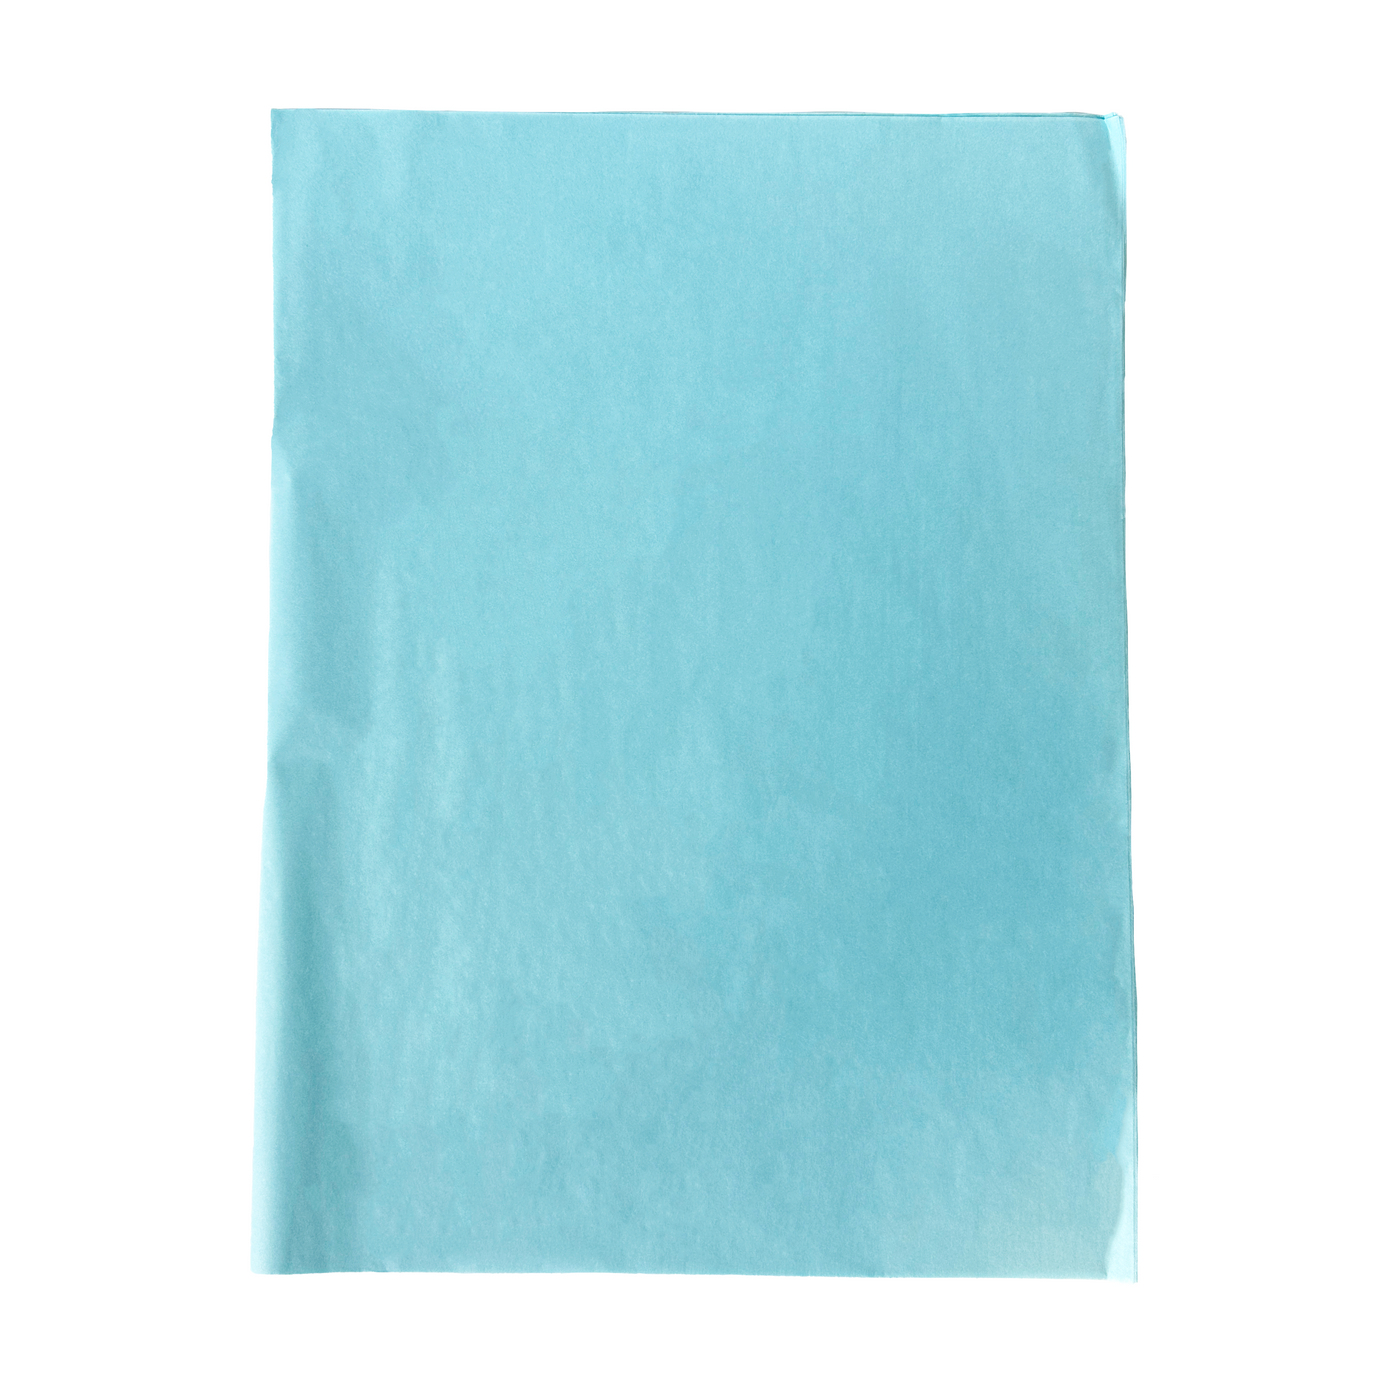 Acid-Free Tissue Paper - Blue